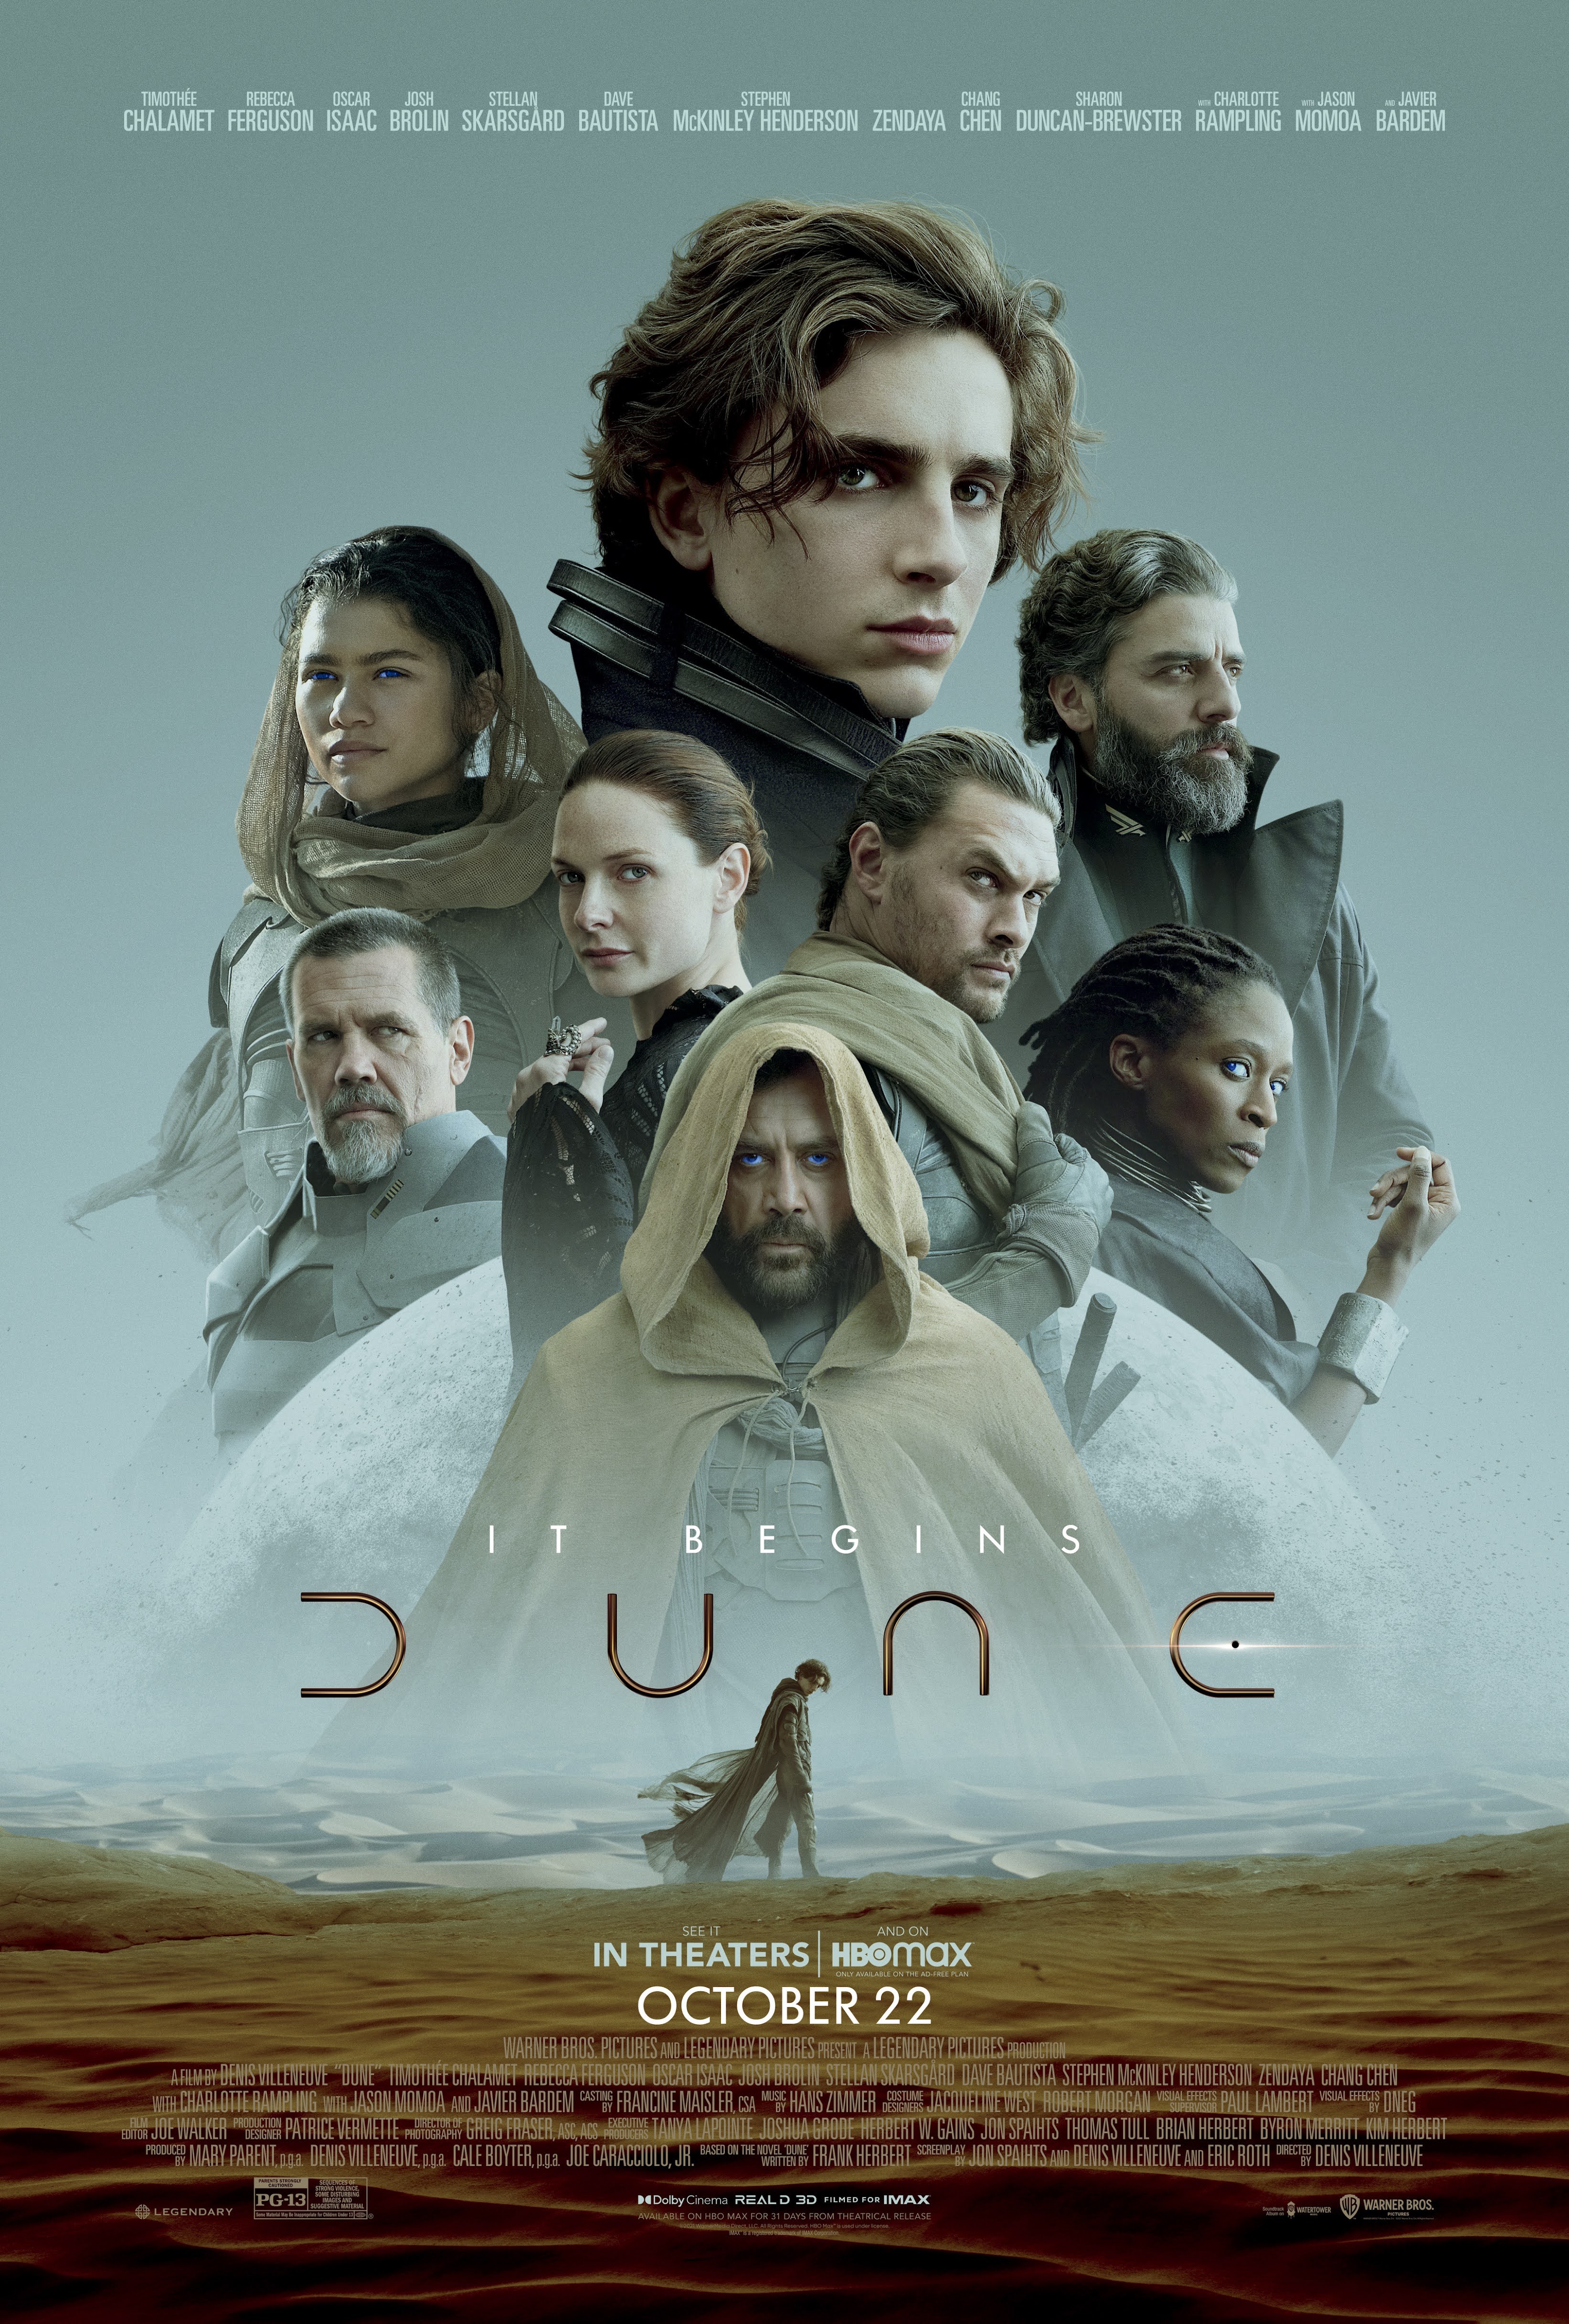 Dune (film) Warner Bros